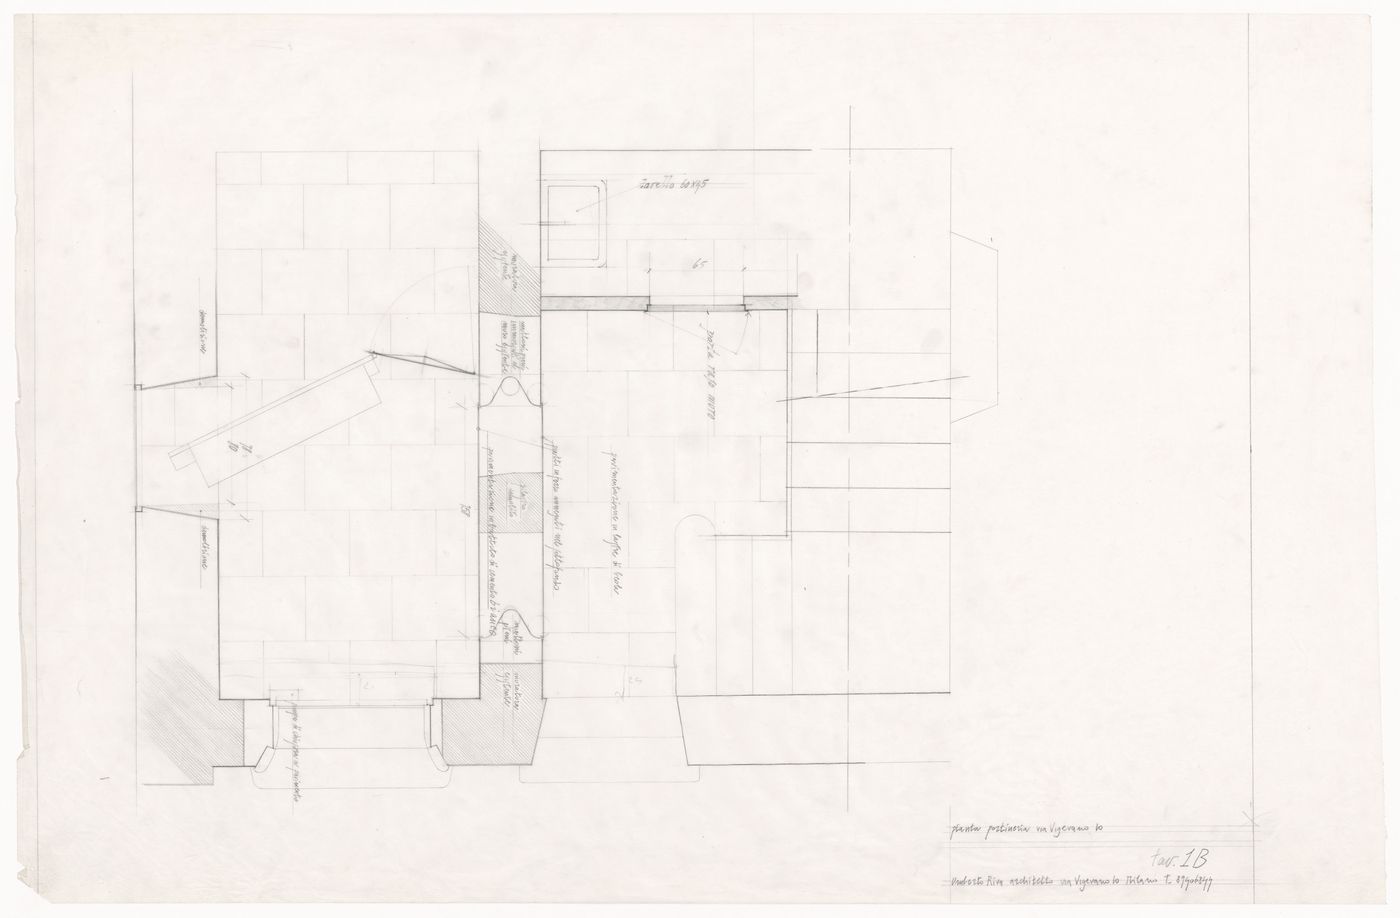 Plan for Via Vigevano condominio e studio, Milan, Italy